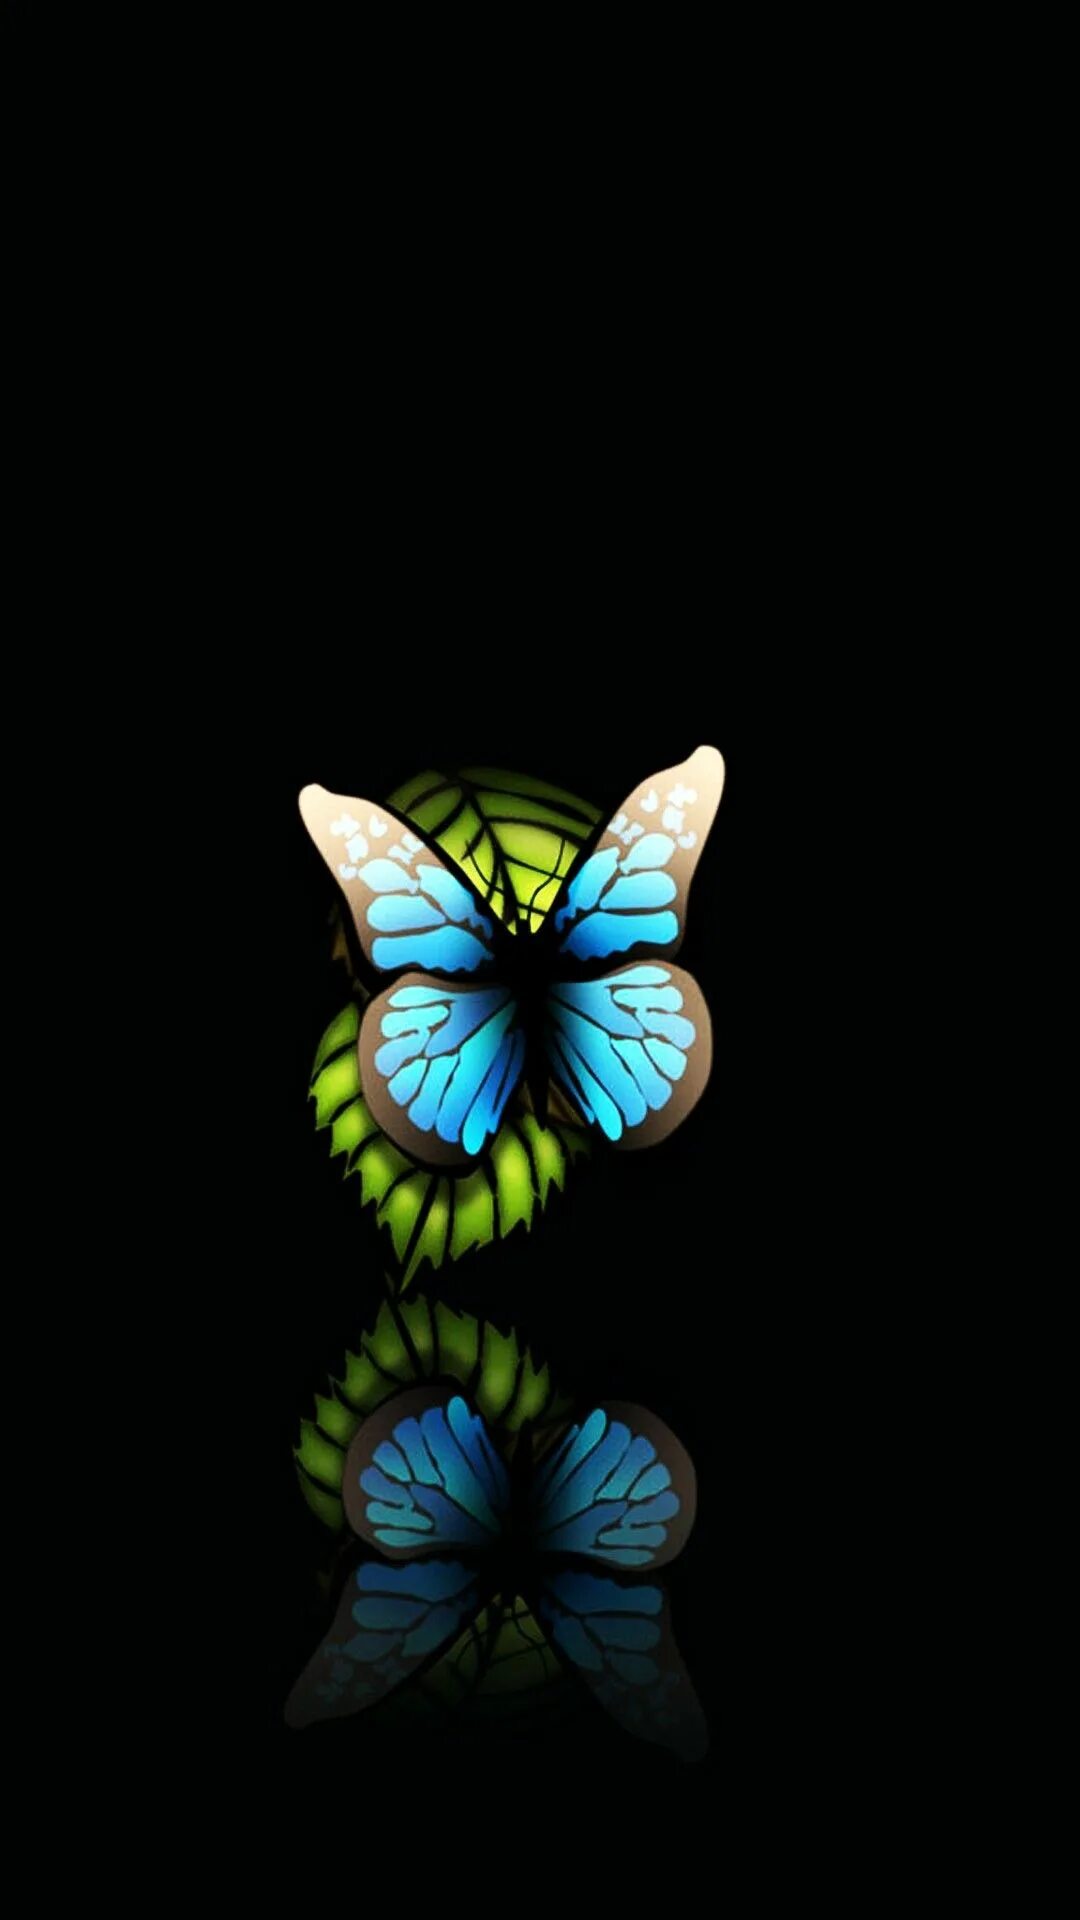 Красивые обои на андроид вертикально. Обои с бабочками. Бабочка на темном фоне. Бабочки на черном фоне. Синяя бабочка.